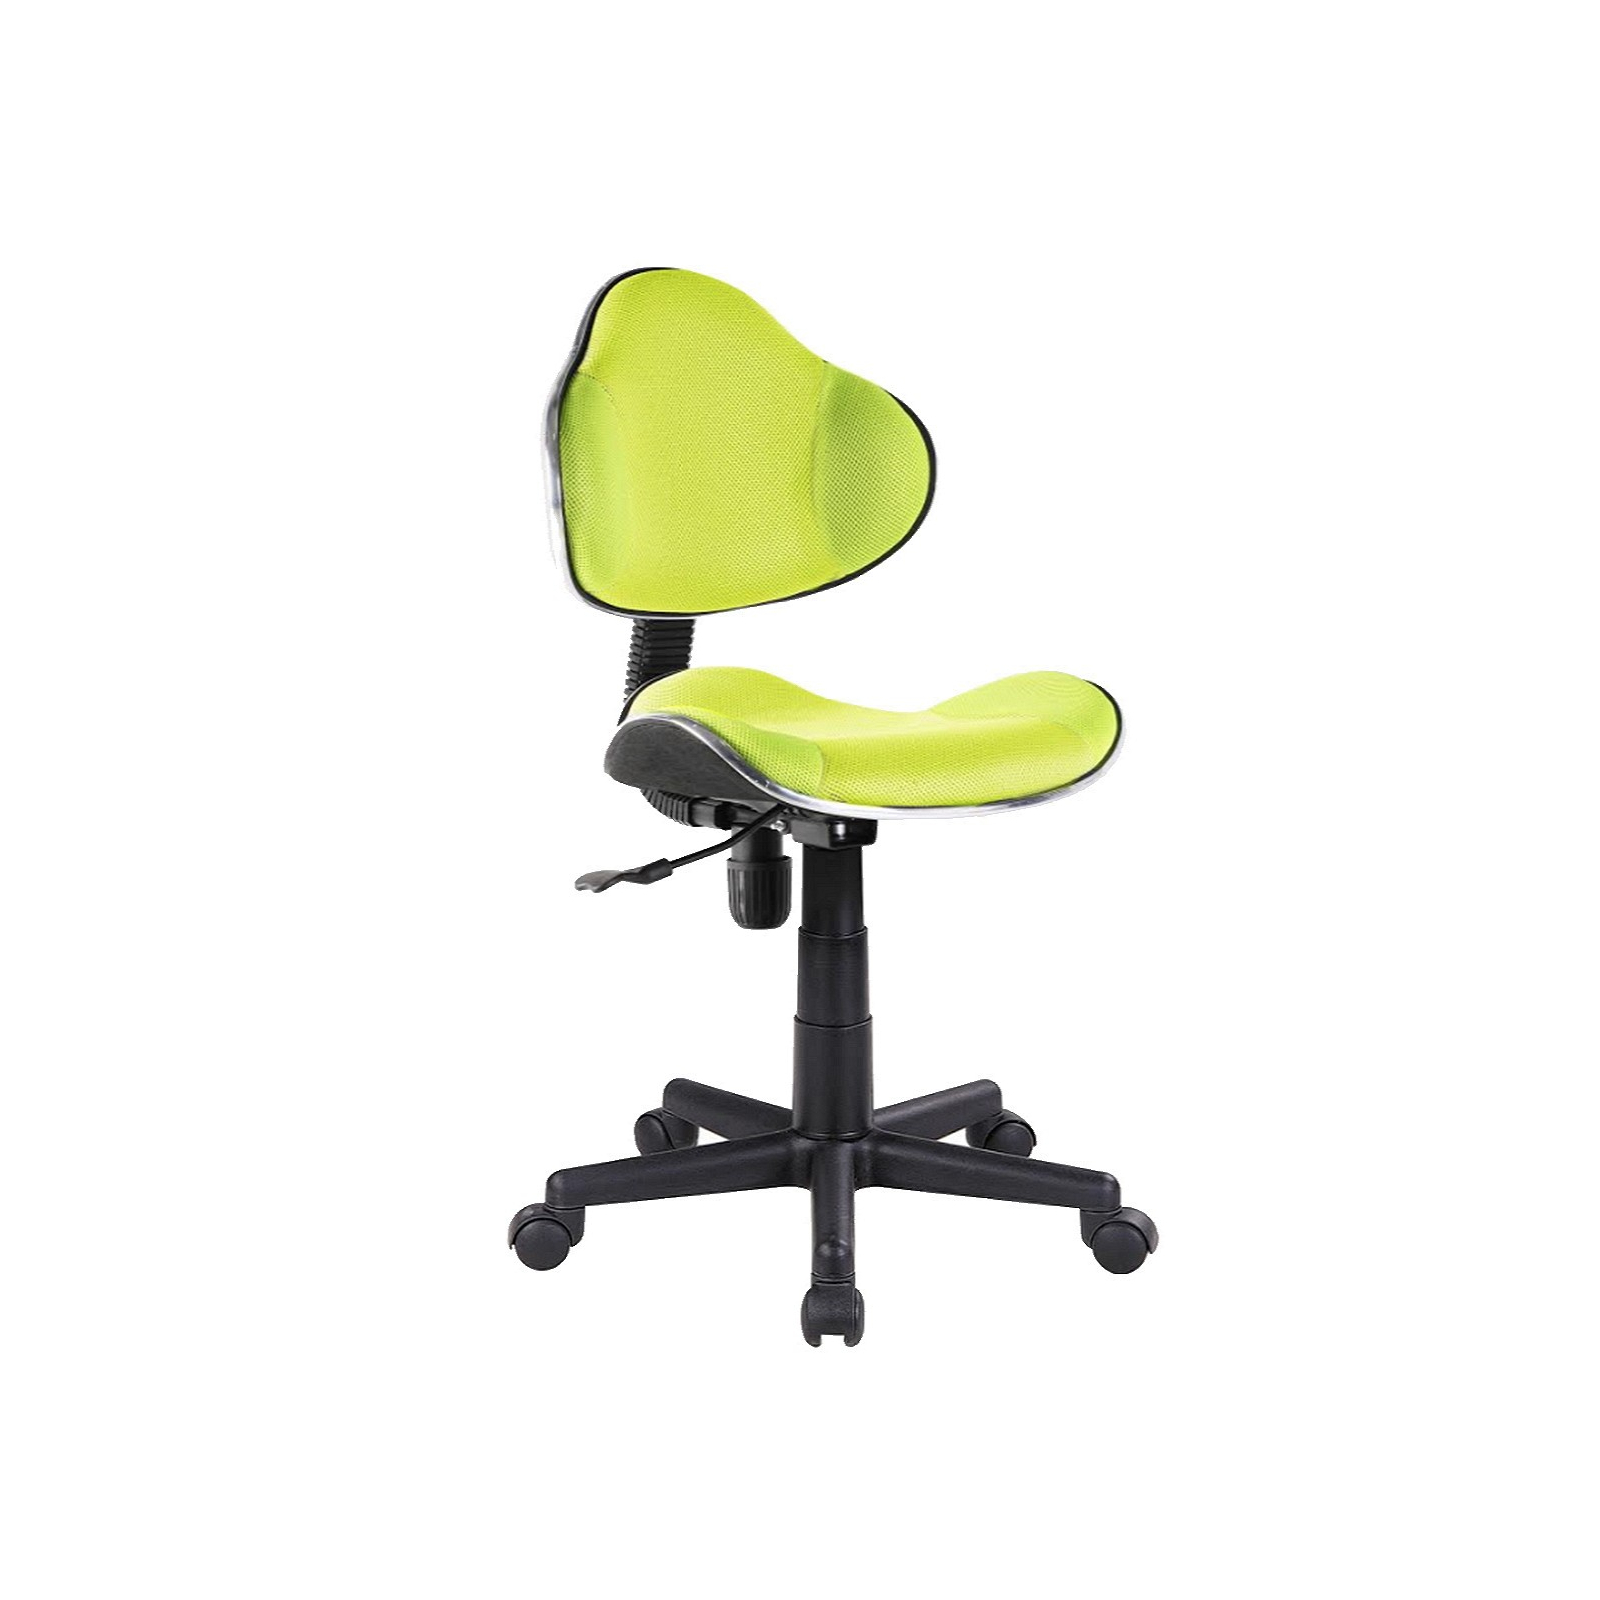 Дитяче крісло FunDesk LST3 Green (221760)